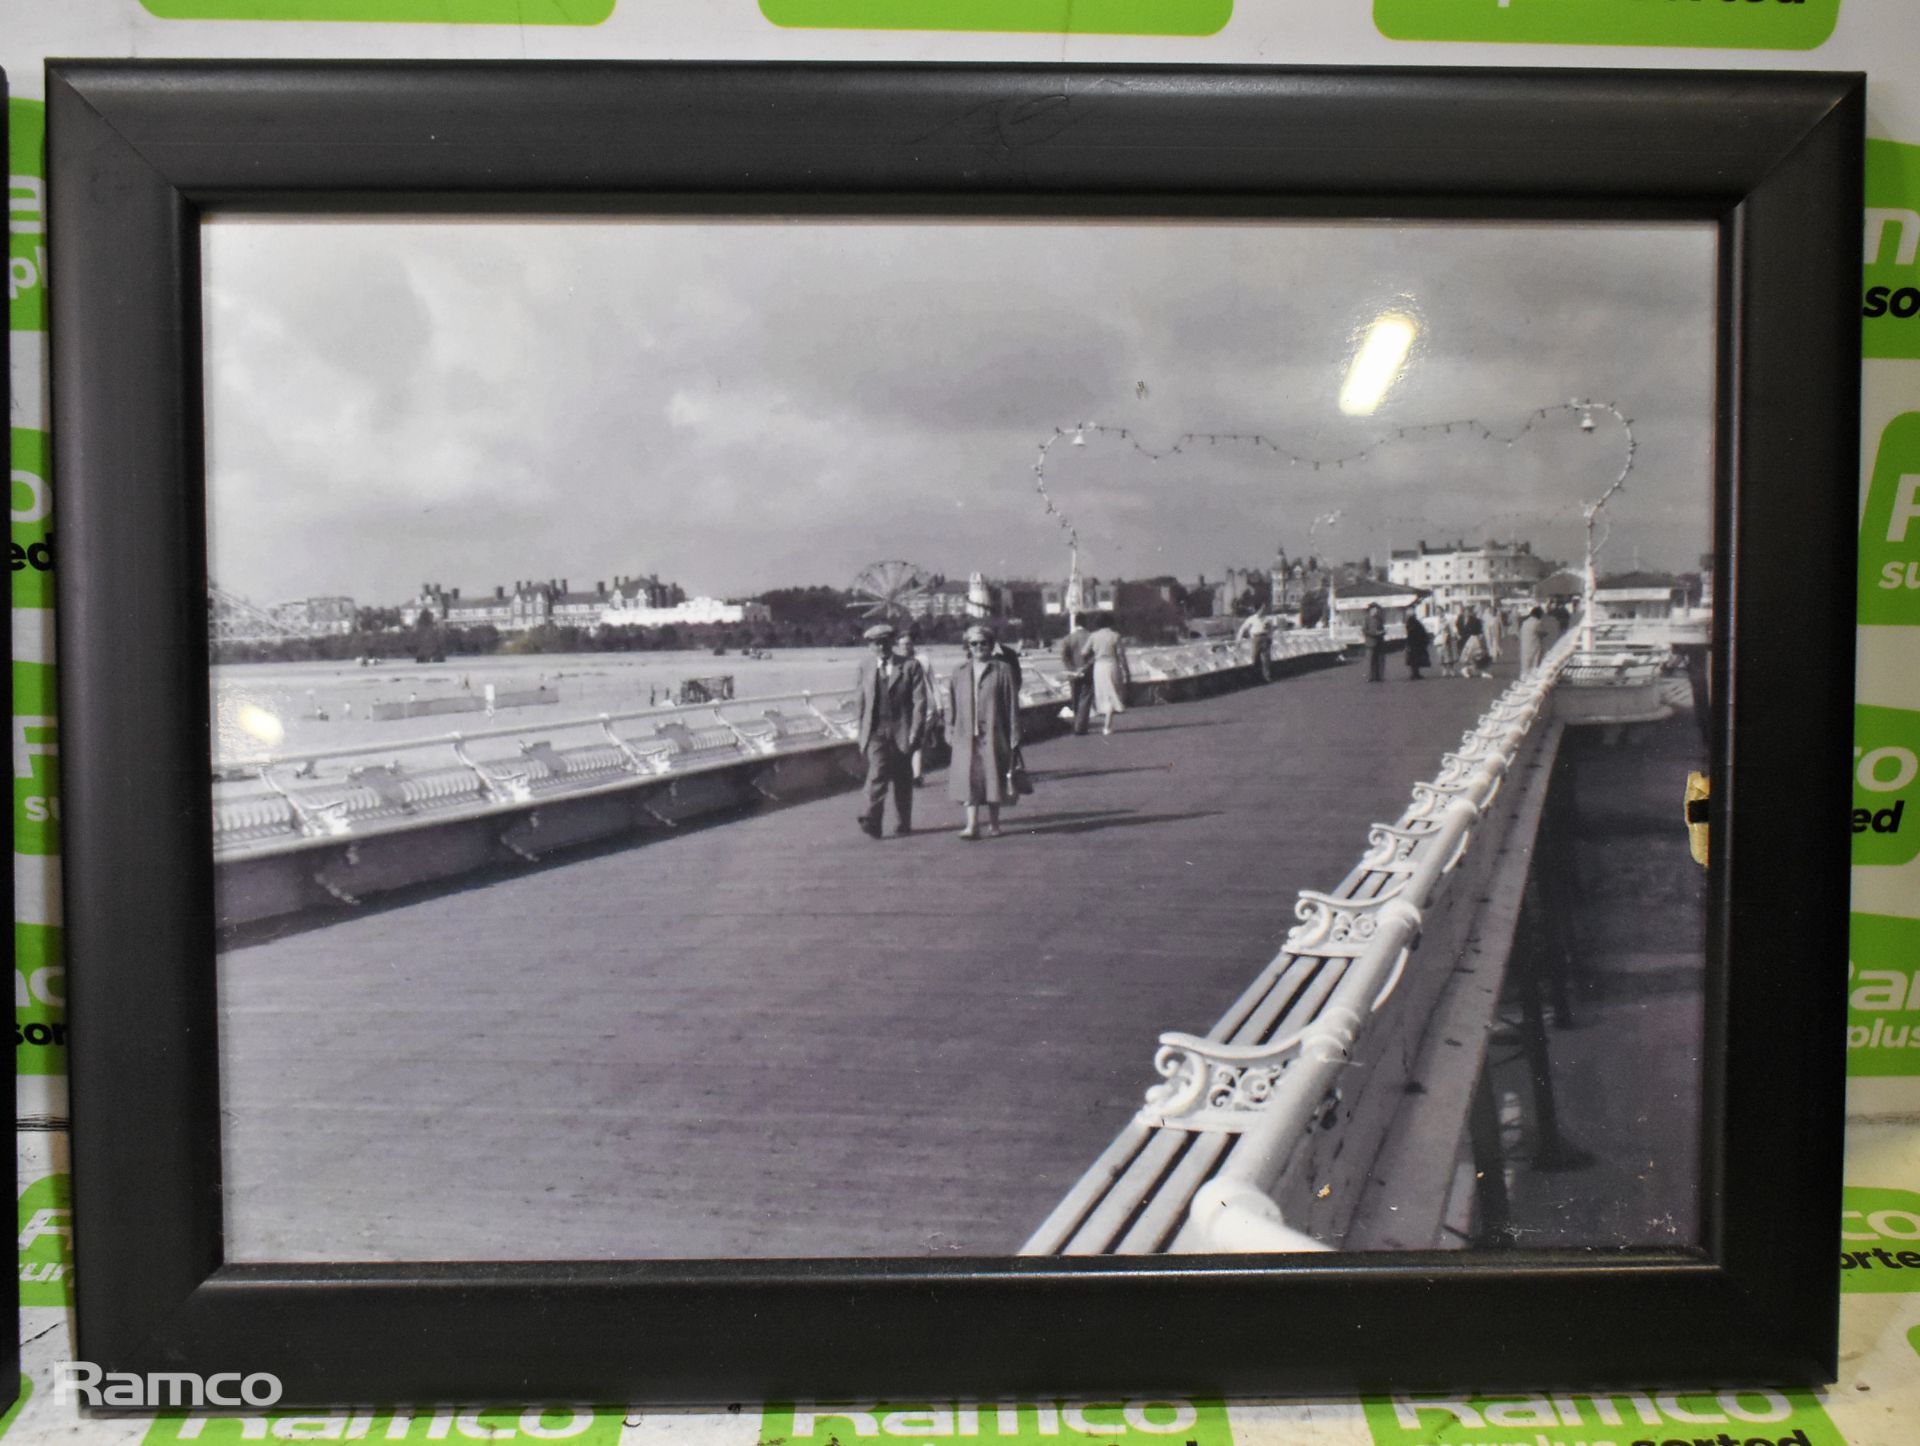 4x Skegness memorabilia photos - Skegness Pier - frame size: 13.5 x 10 inches - Bild 5 aus 5